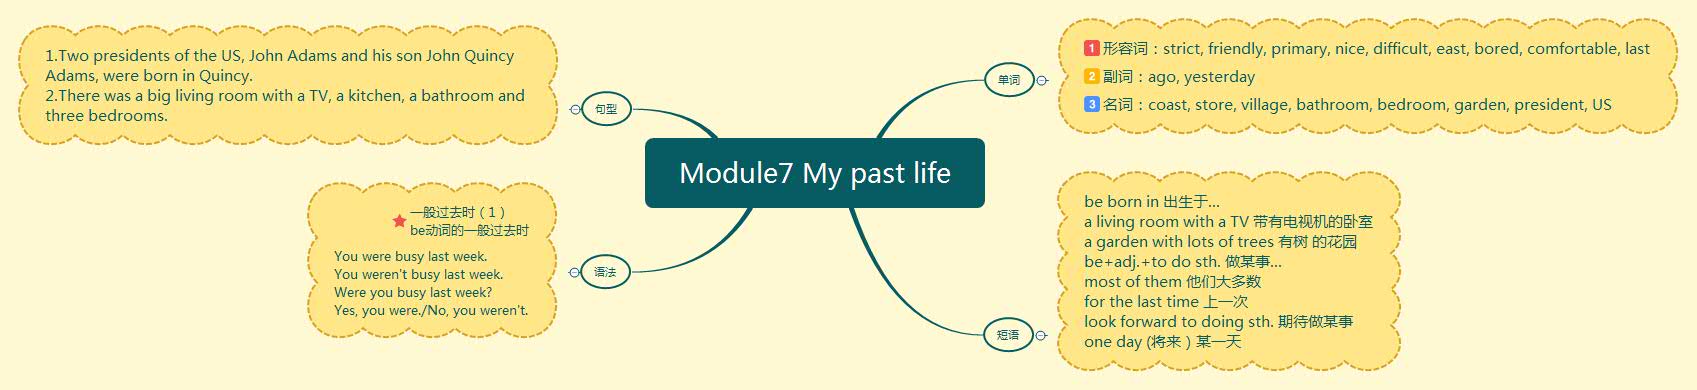 Module7 My past life.jpg